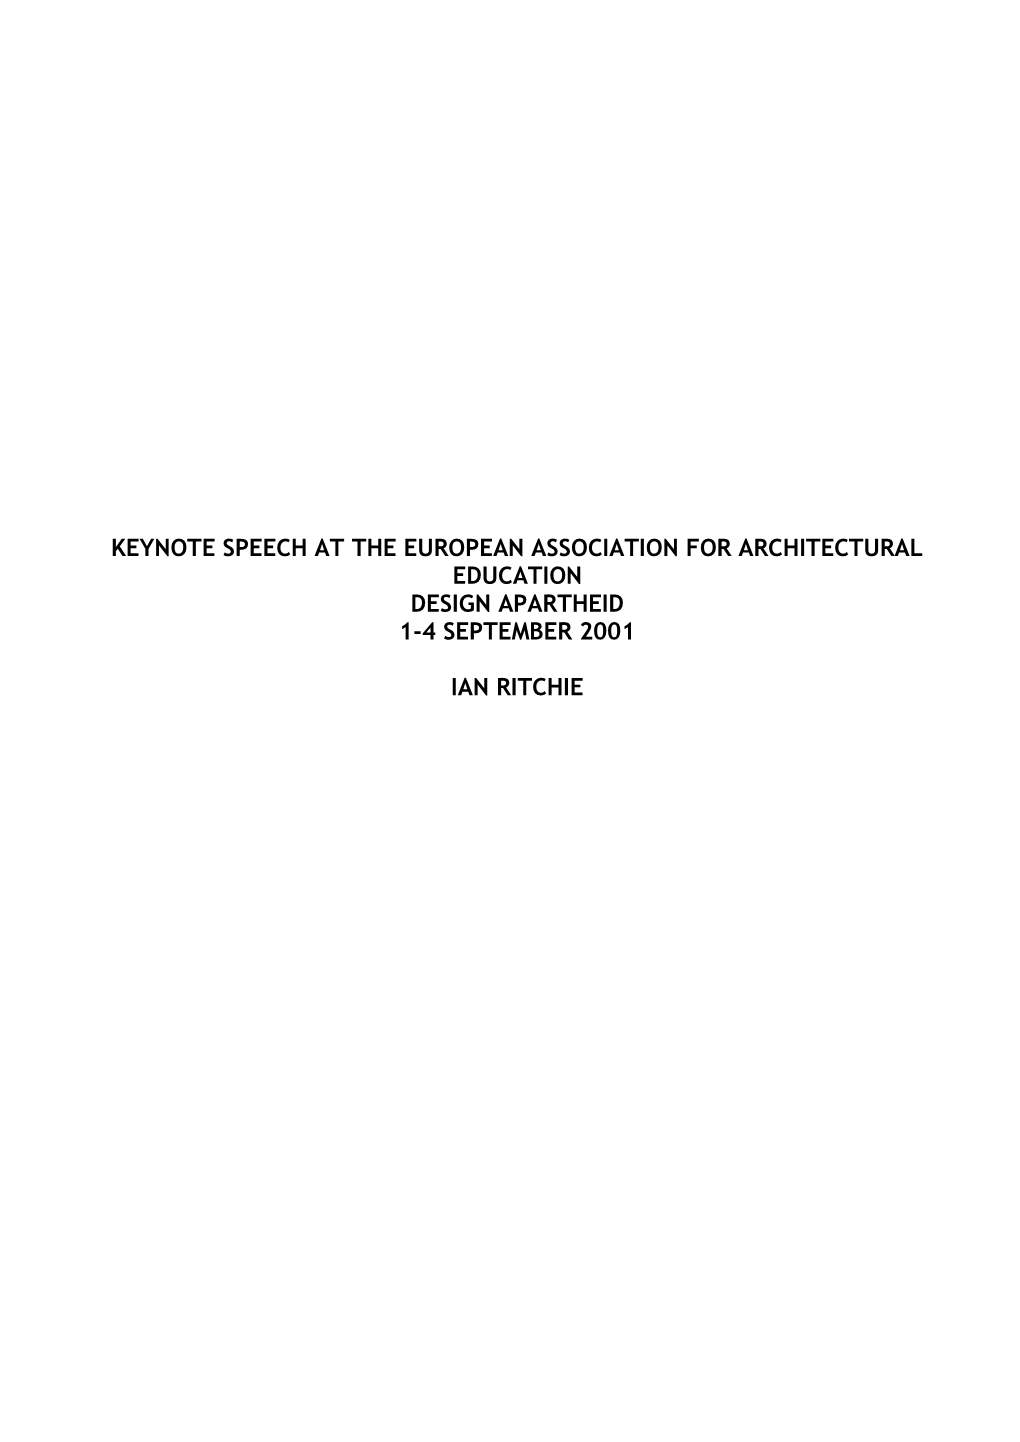 Keynote Speech at the European Association for Architectural Education Design Apartheid 1-4 September 2001